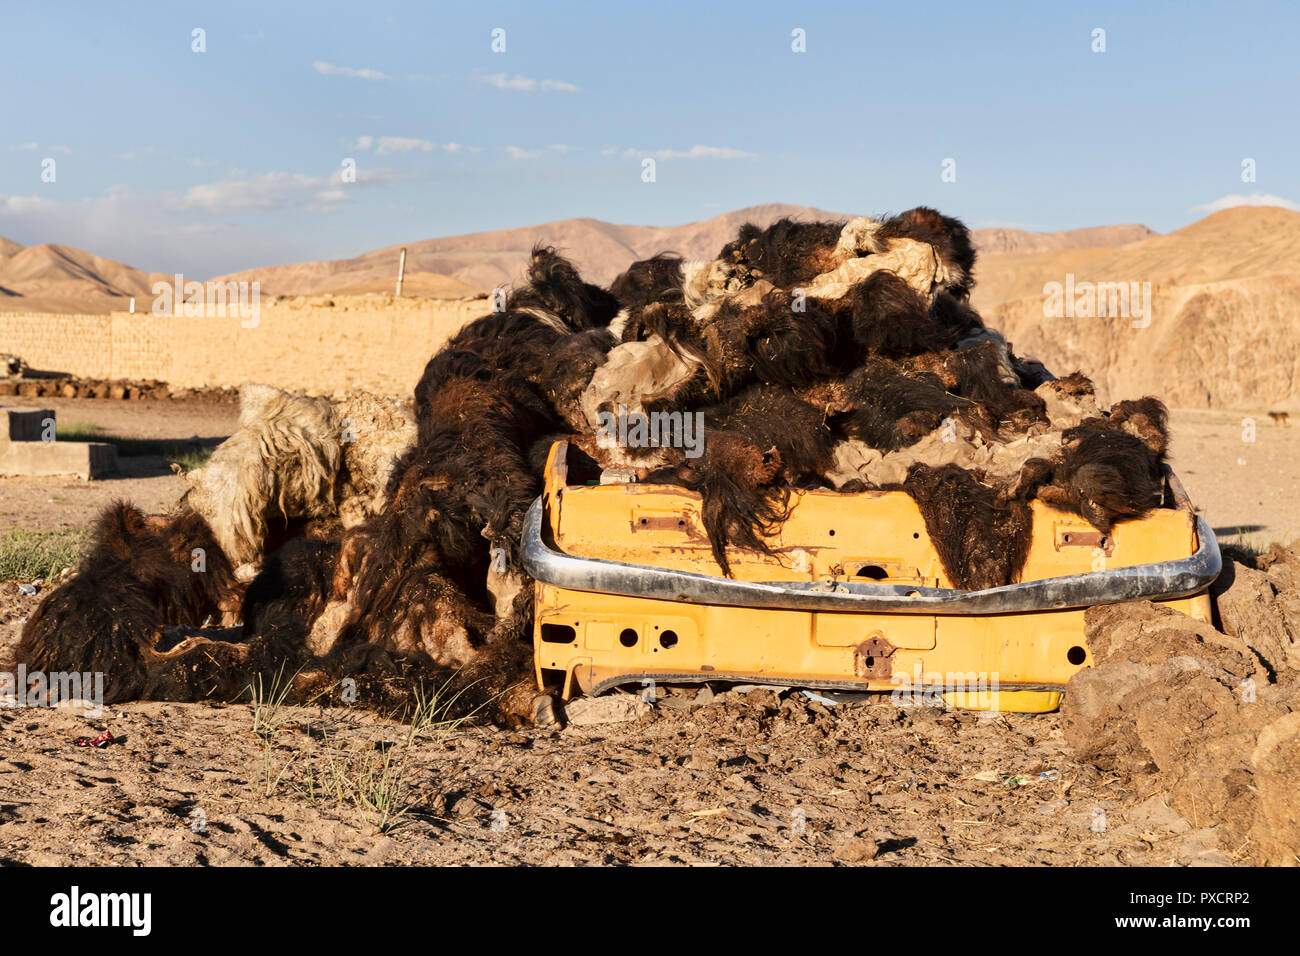 Lana de Oveja encima de un coche convertido en aldea Bulunkul Bulunkul, el Pamir Highway, Gorno Badakhshan, Tayikistán Foto de stock